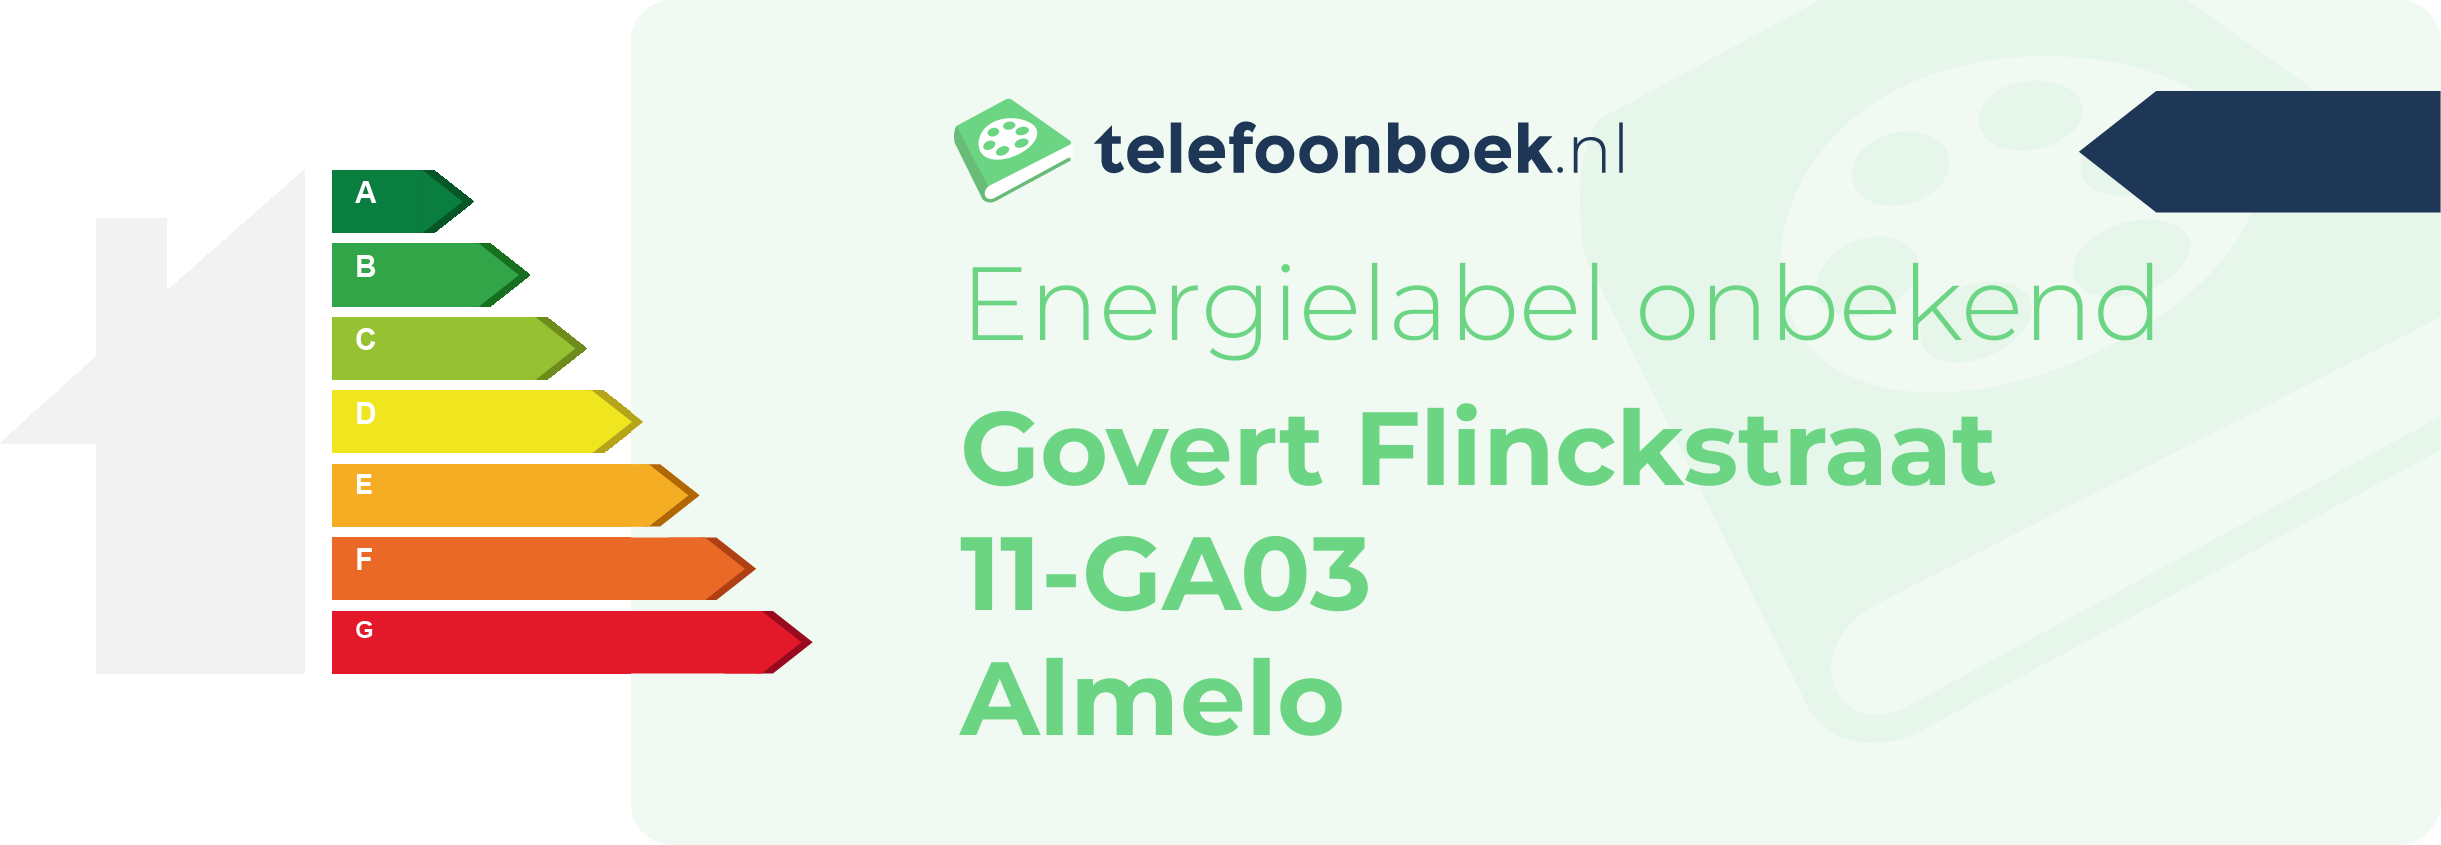 Energielabel Govert Flinckstraat 11-GA03 Almelo